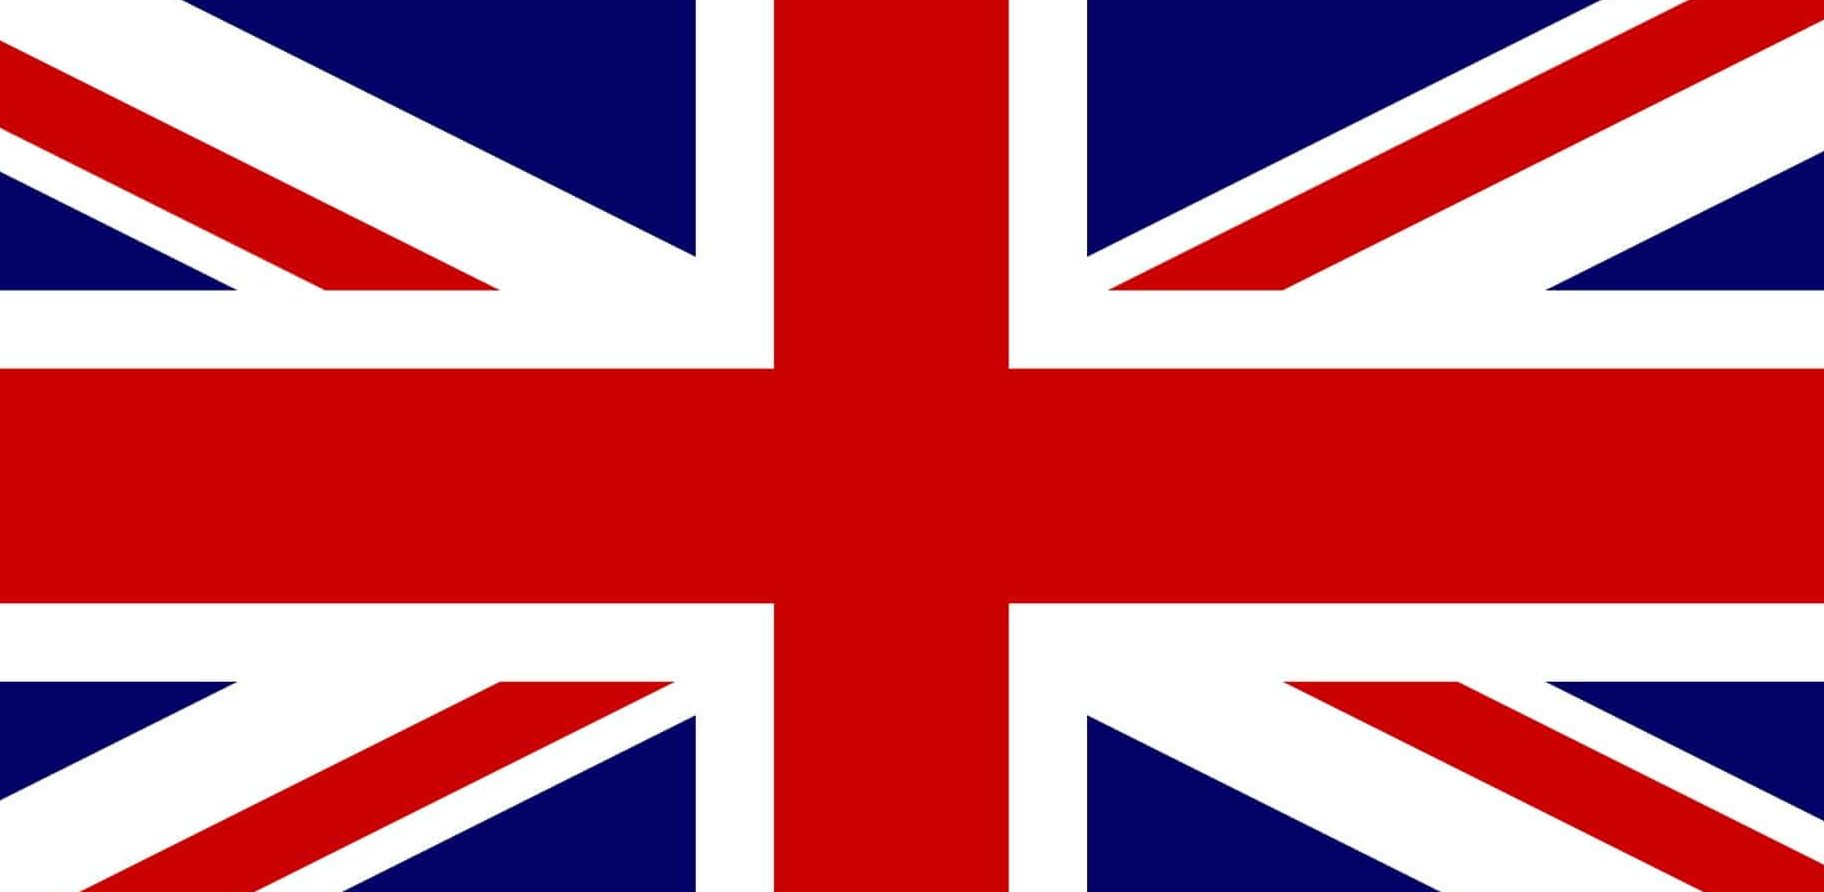 Steagul britanic - union jackBandish britanic - union jack - Marea Britanie